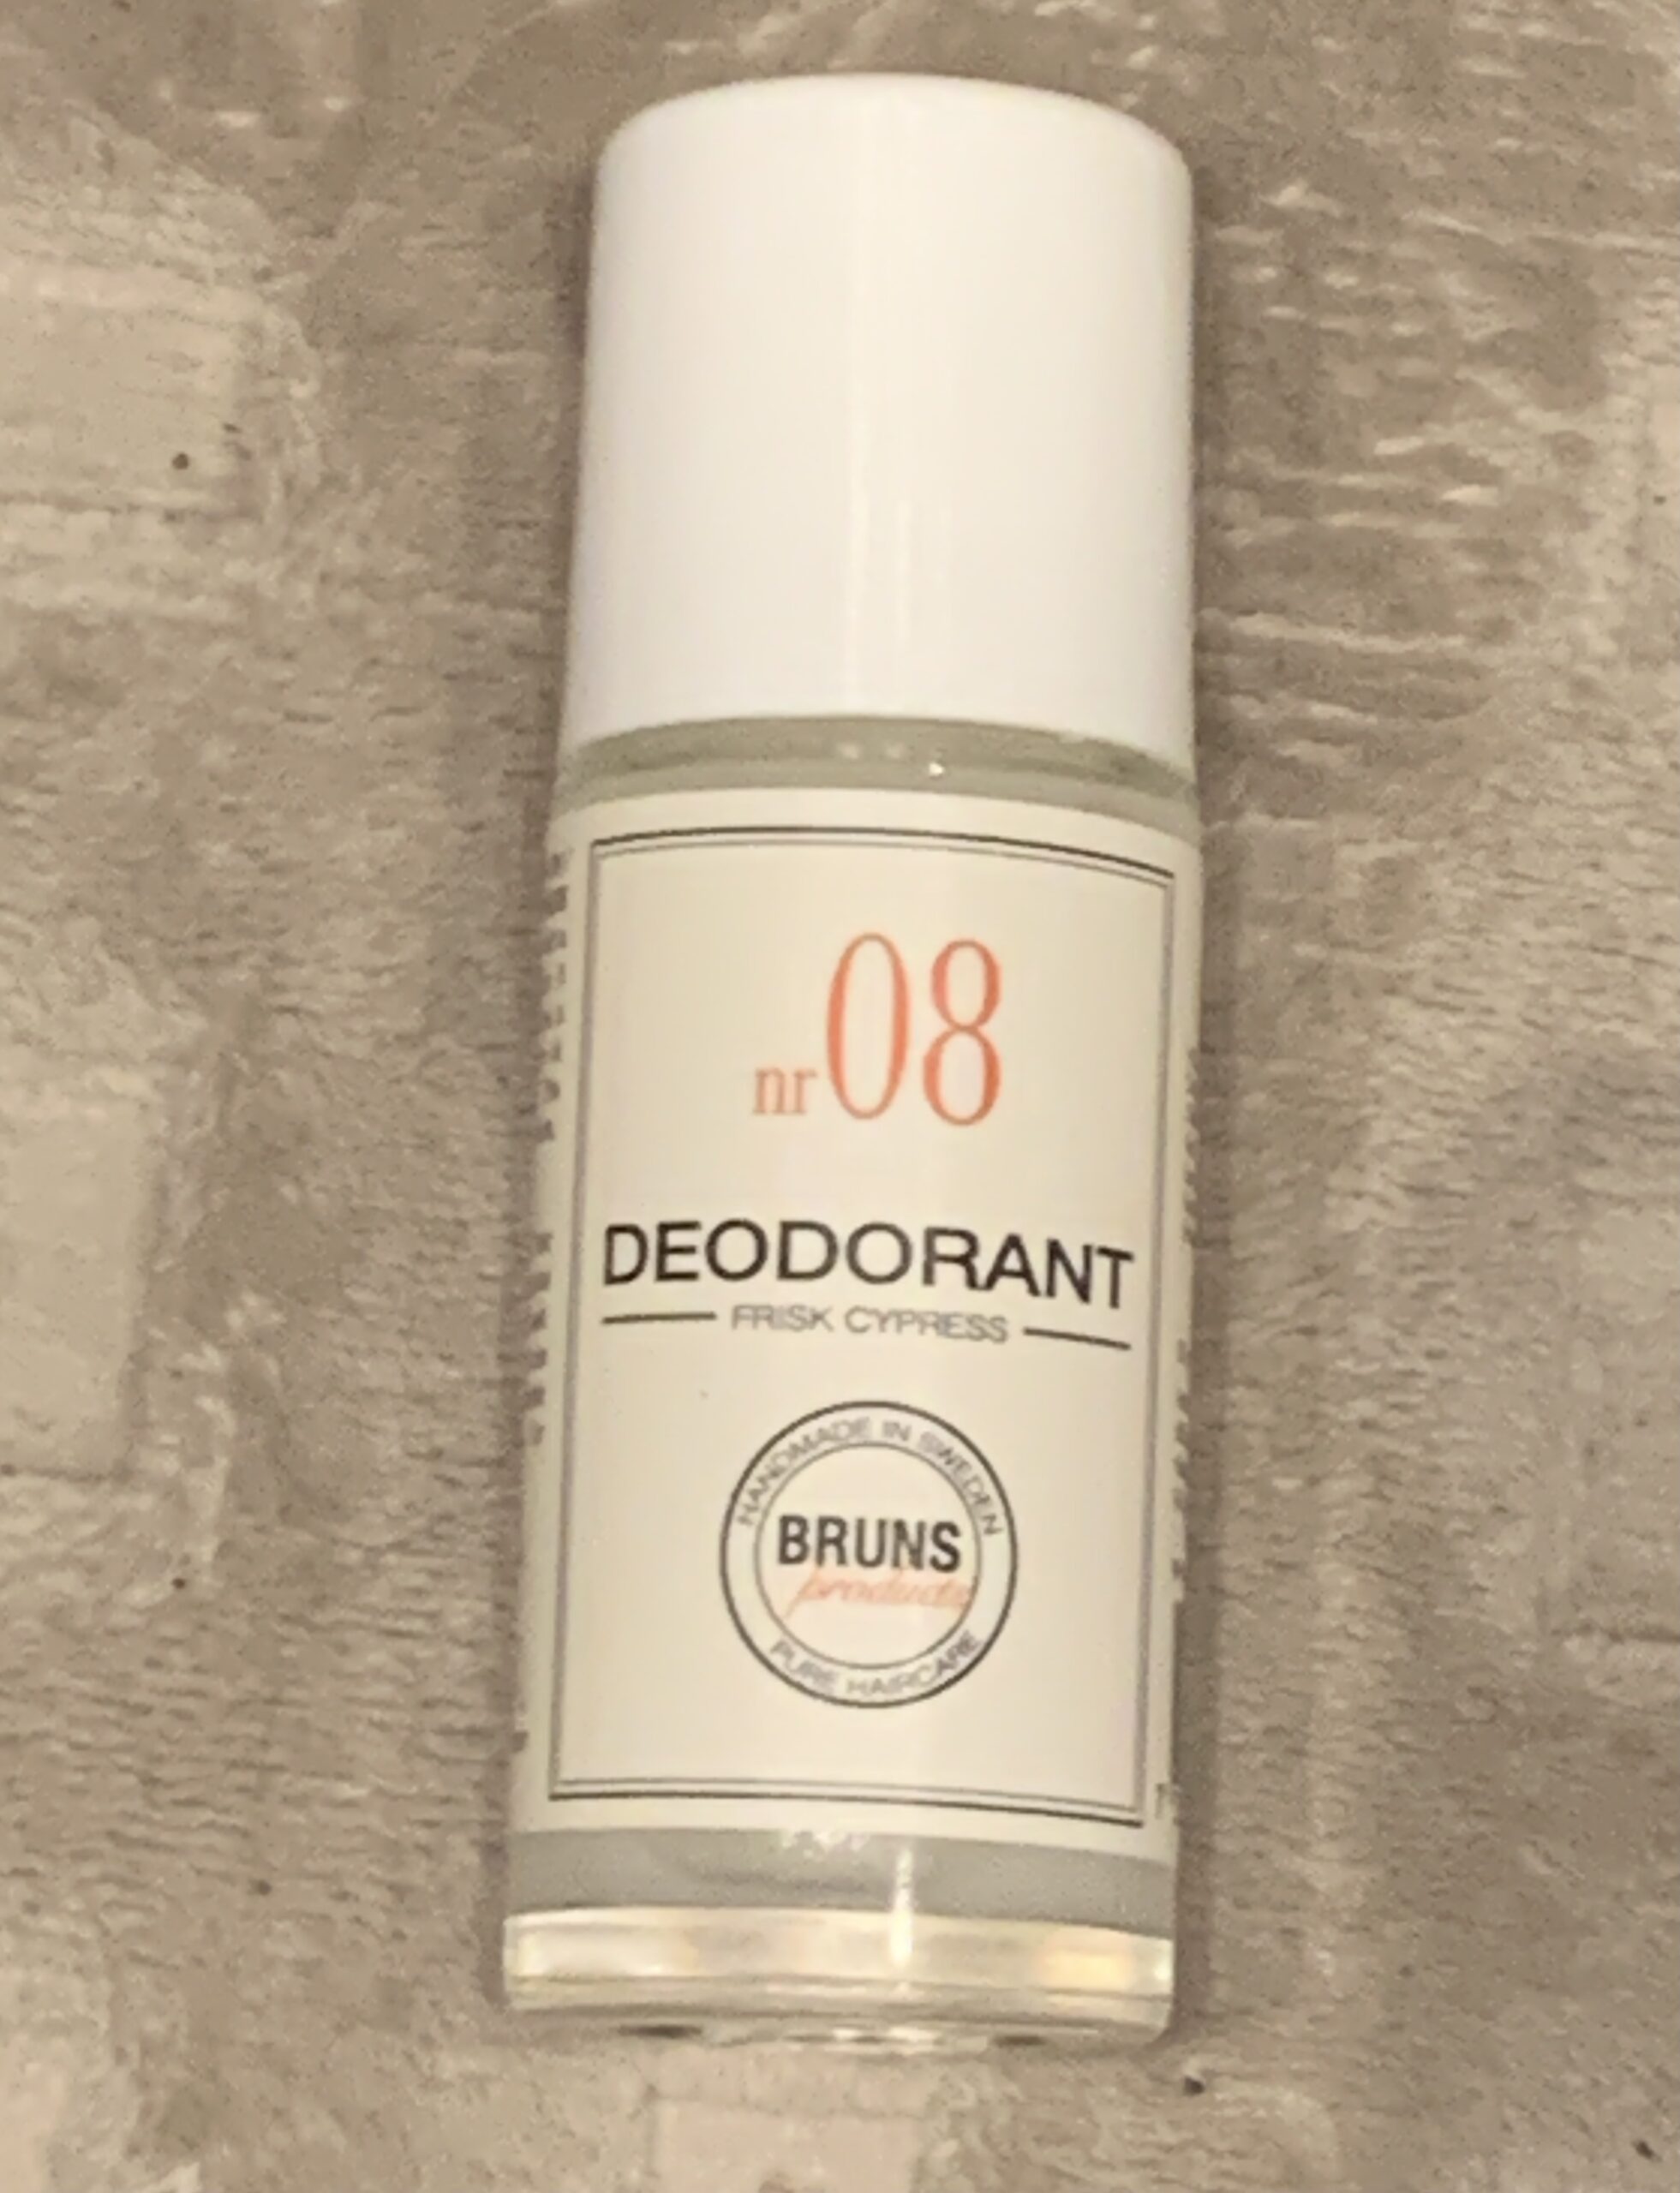 Bruns Products Deodorant Nr08 Frisk Cypress